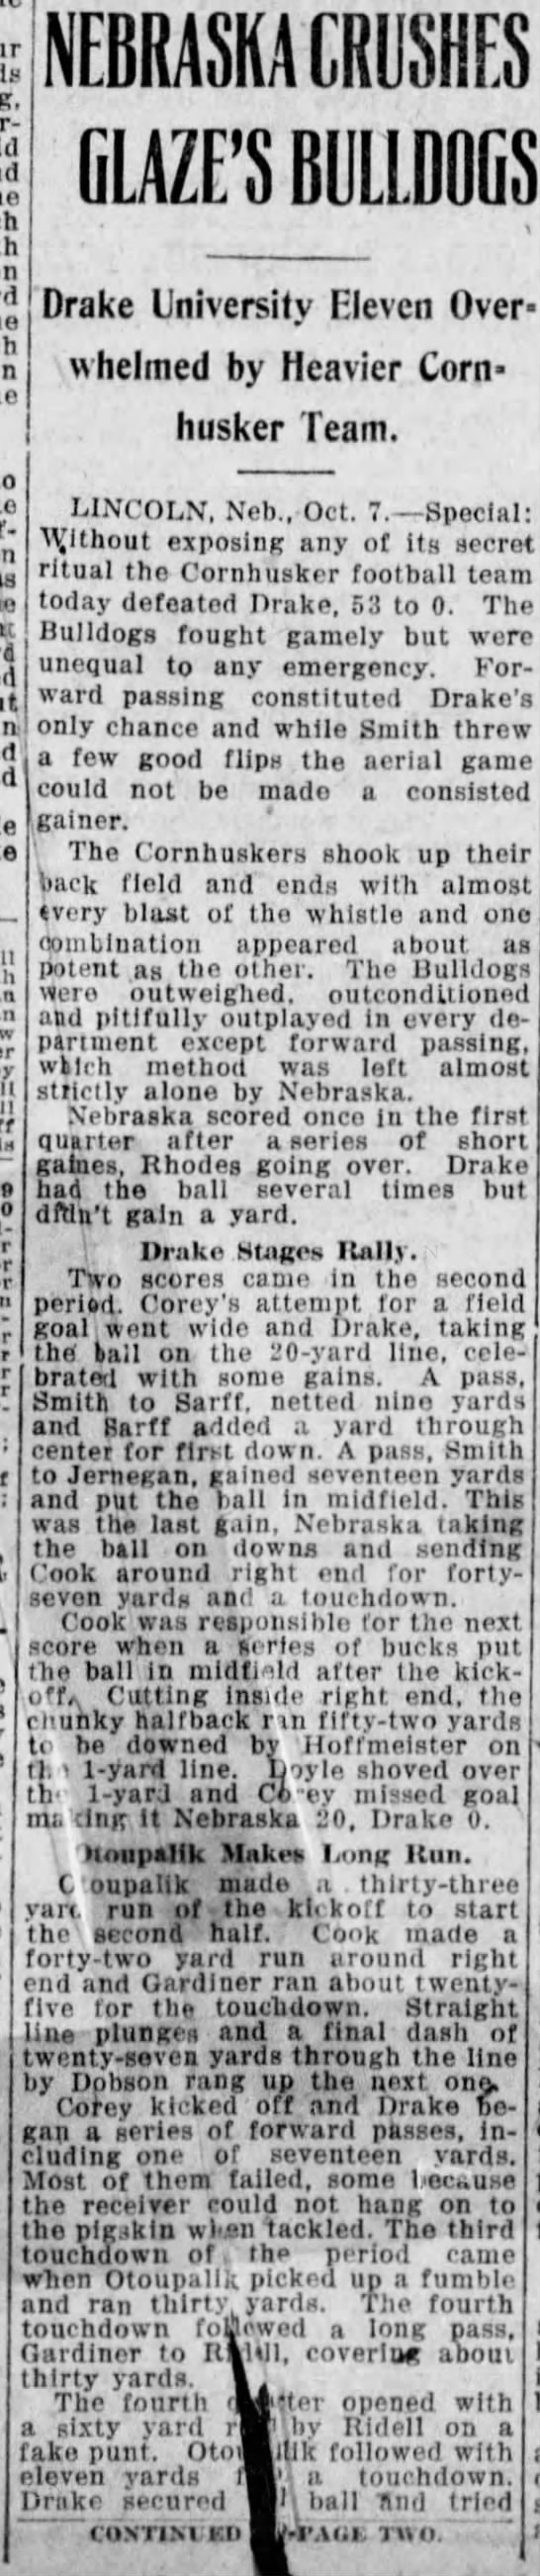 1916 Nebraska-Drake football, part 1 - 